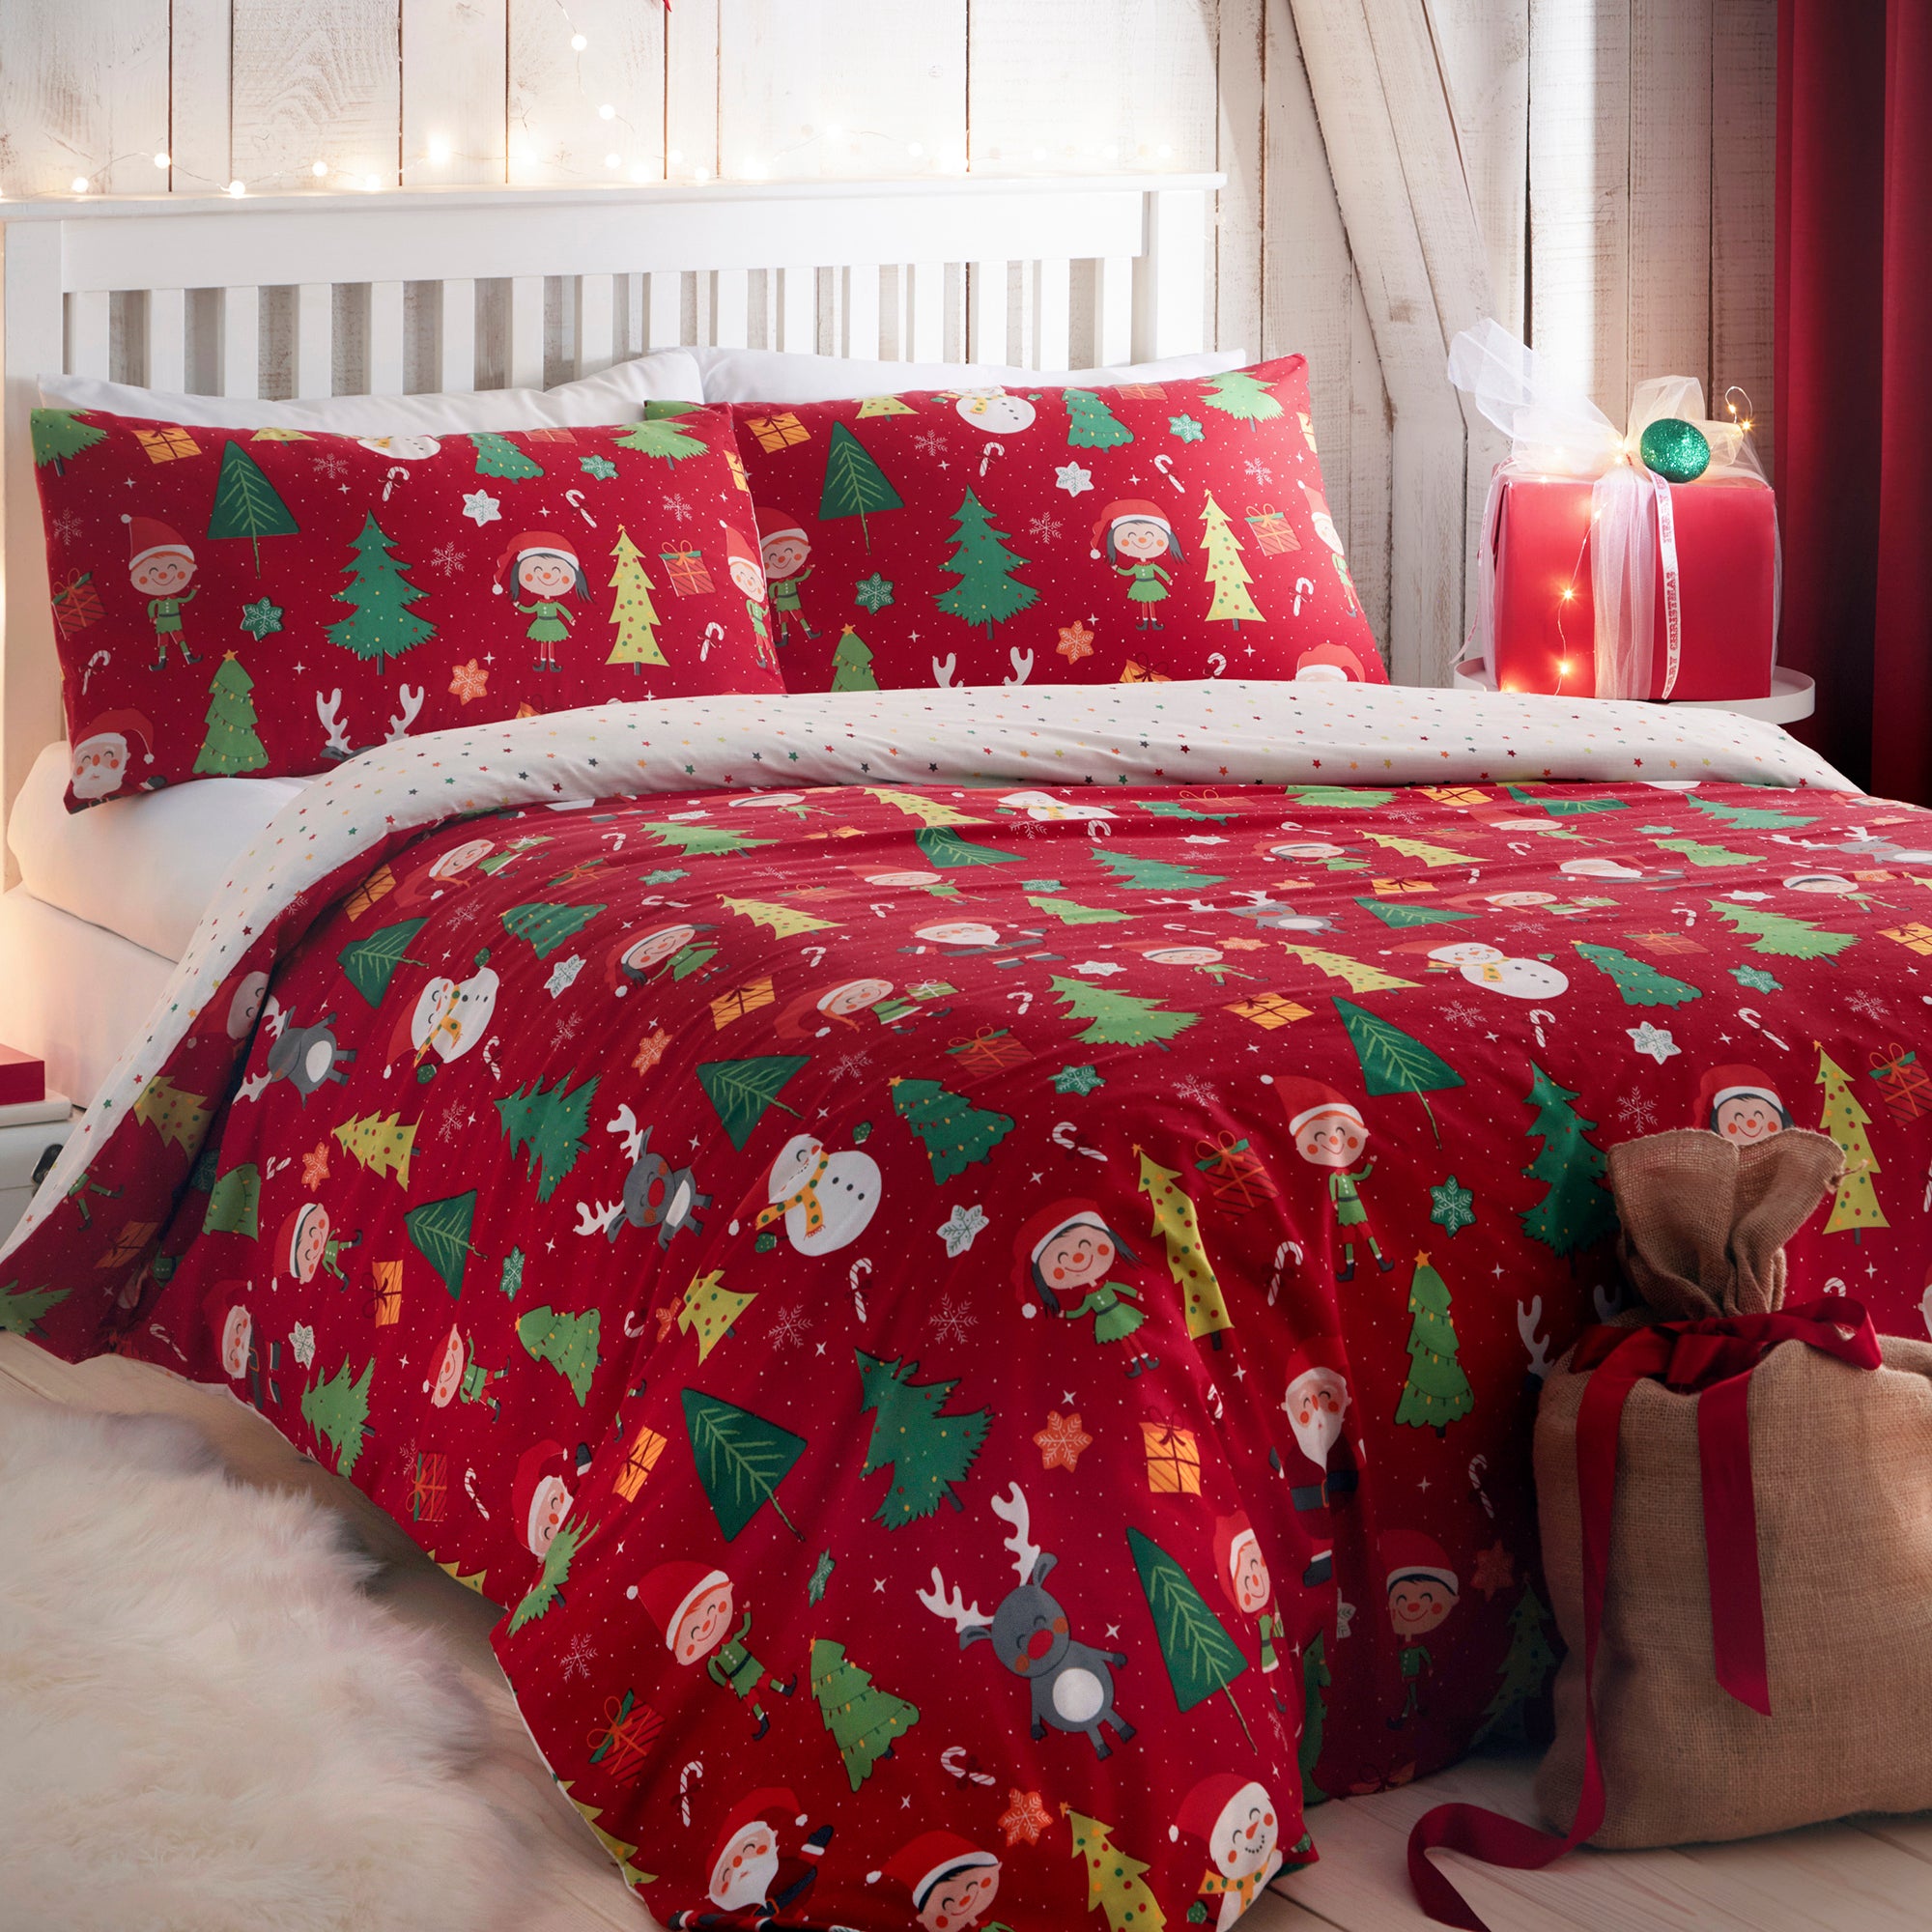 Elf & Santa - Easy Care Duvet Cover Set in Multi - By Bedlam Christmas